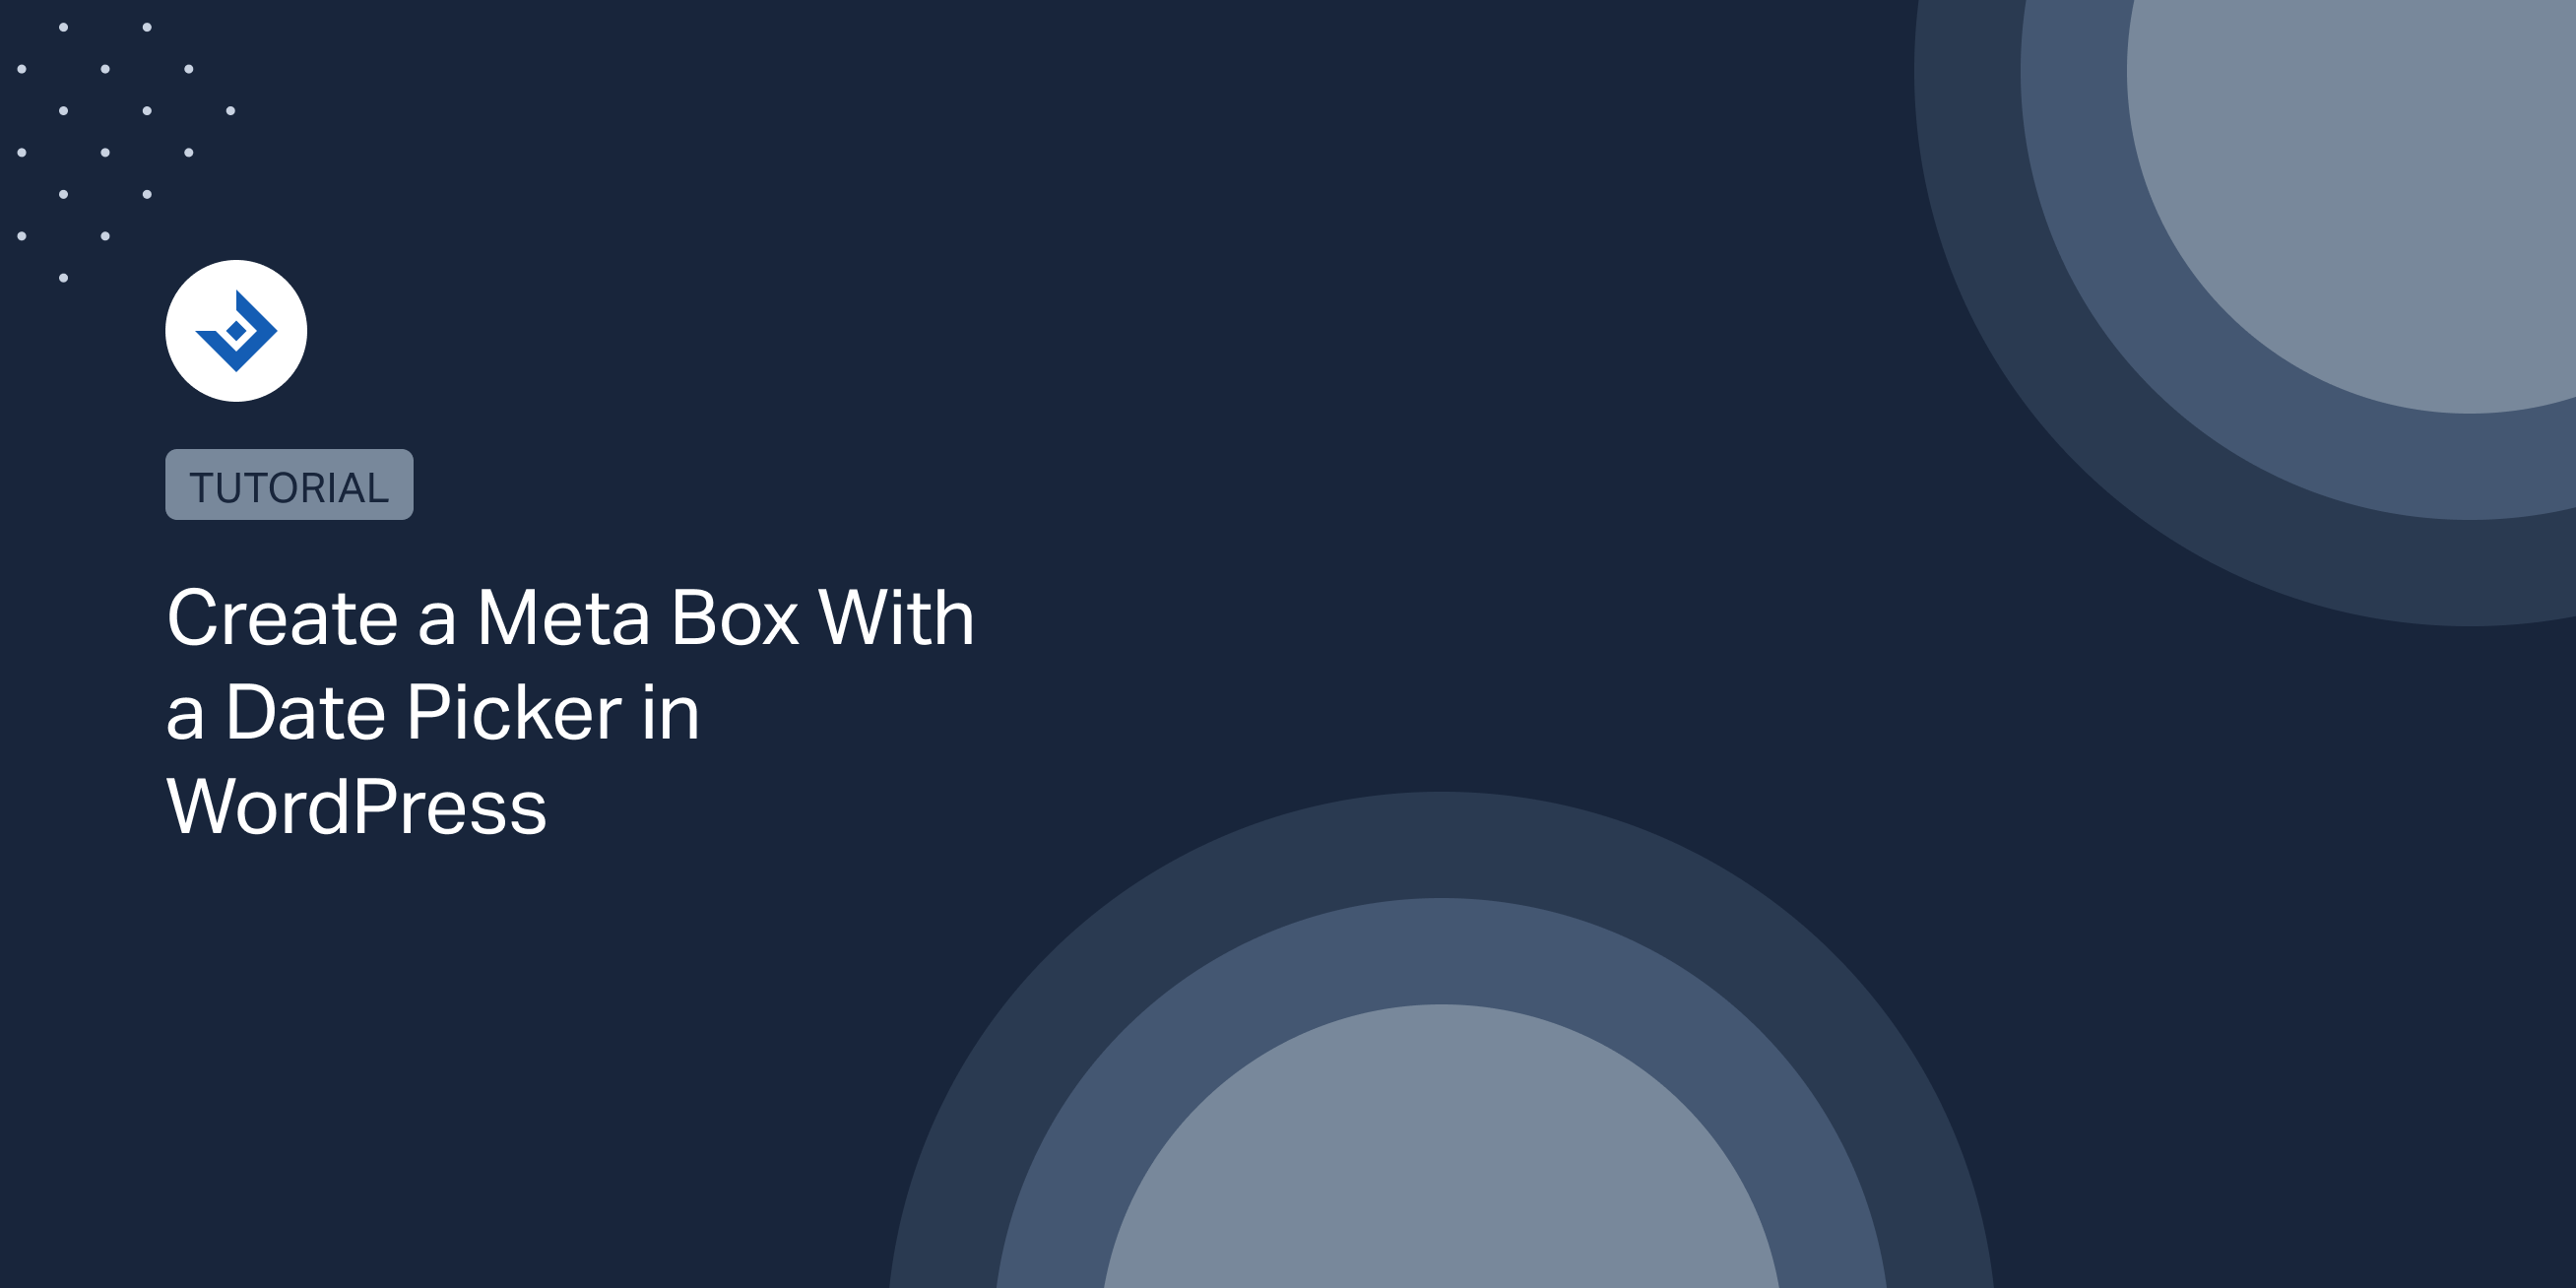 Create a Meta Box With a Date Picker in WordPress